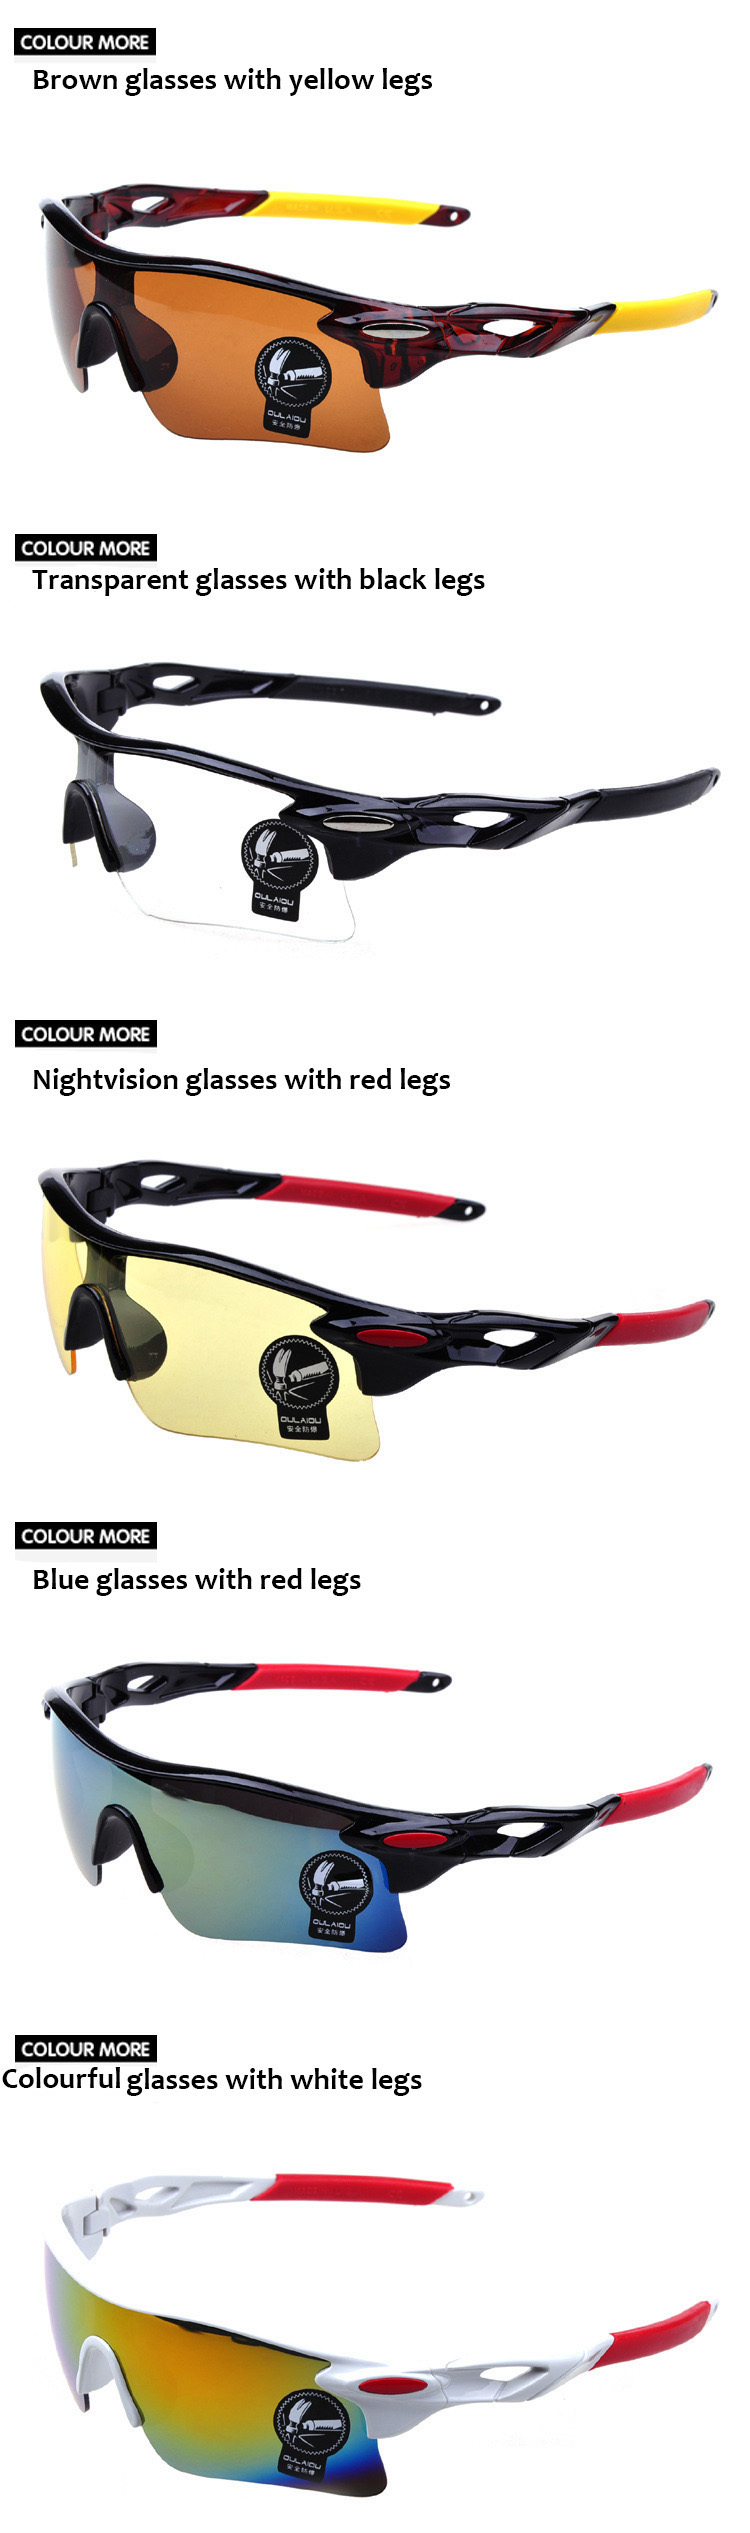 6 2014 Fashion Hot Men Women Sunglasses Unisex Dazzle Colour Cycling Bicycle Bike Sports Fishing Driving Skiing Sunglasses Oculos